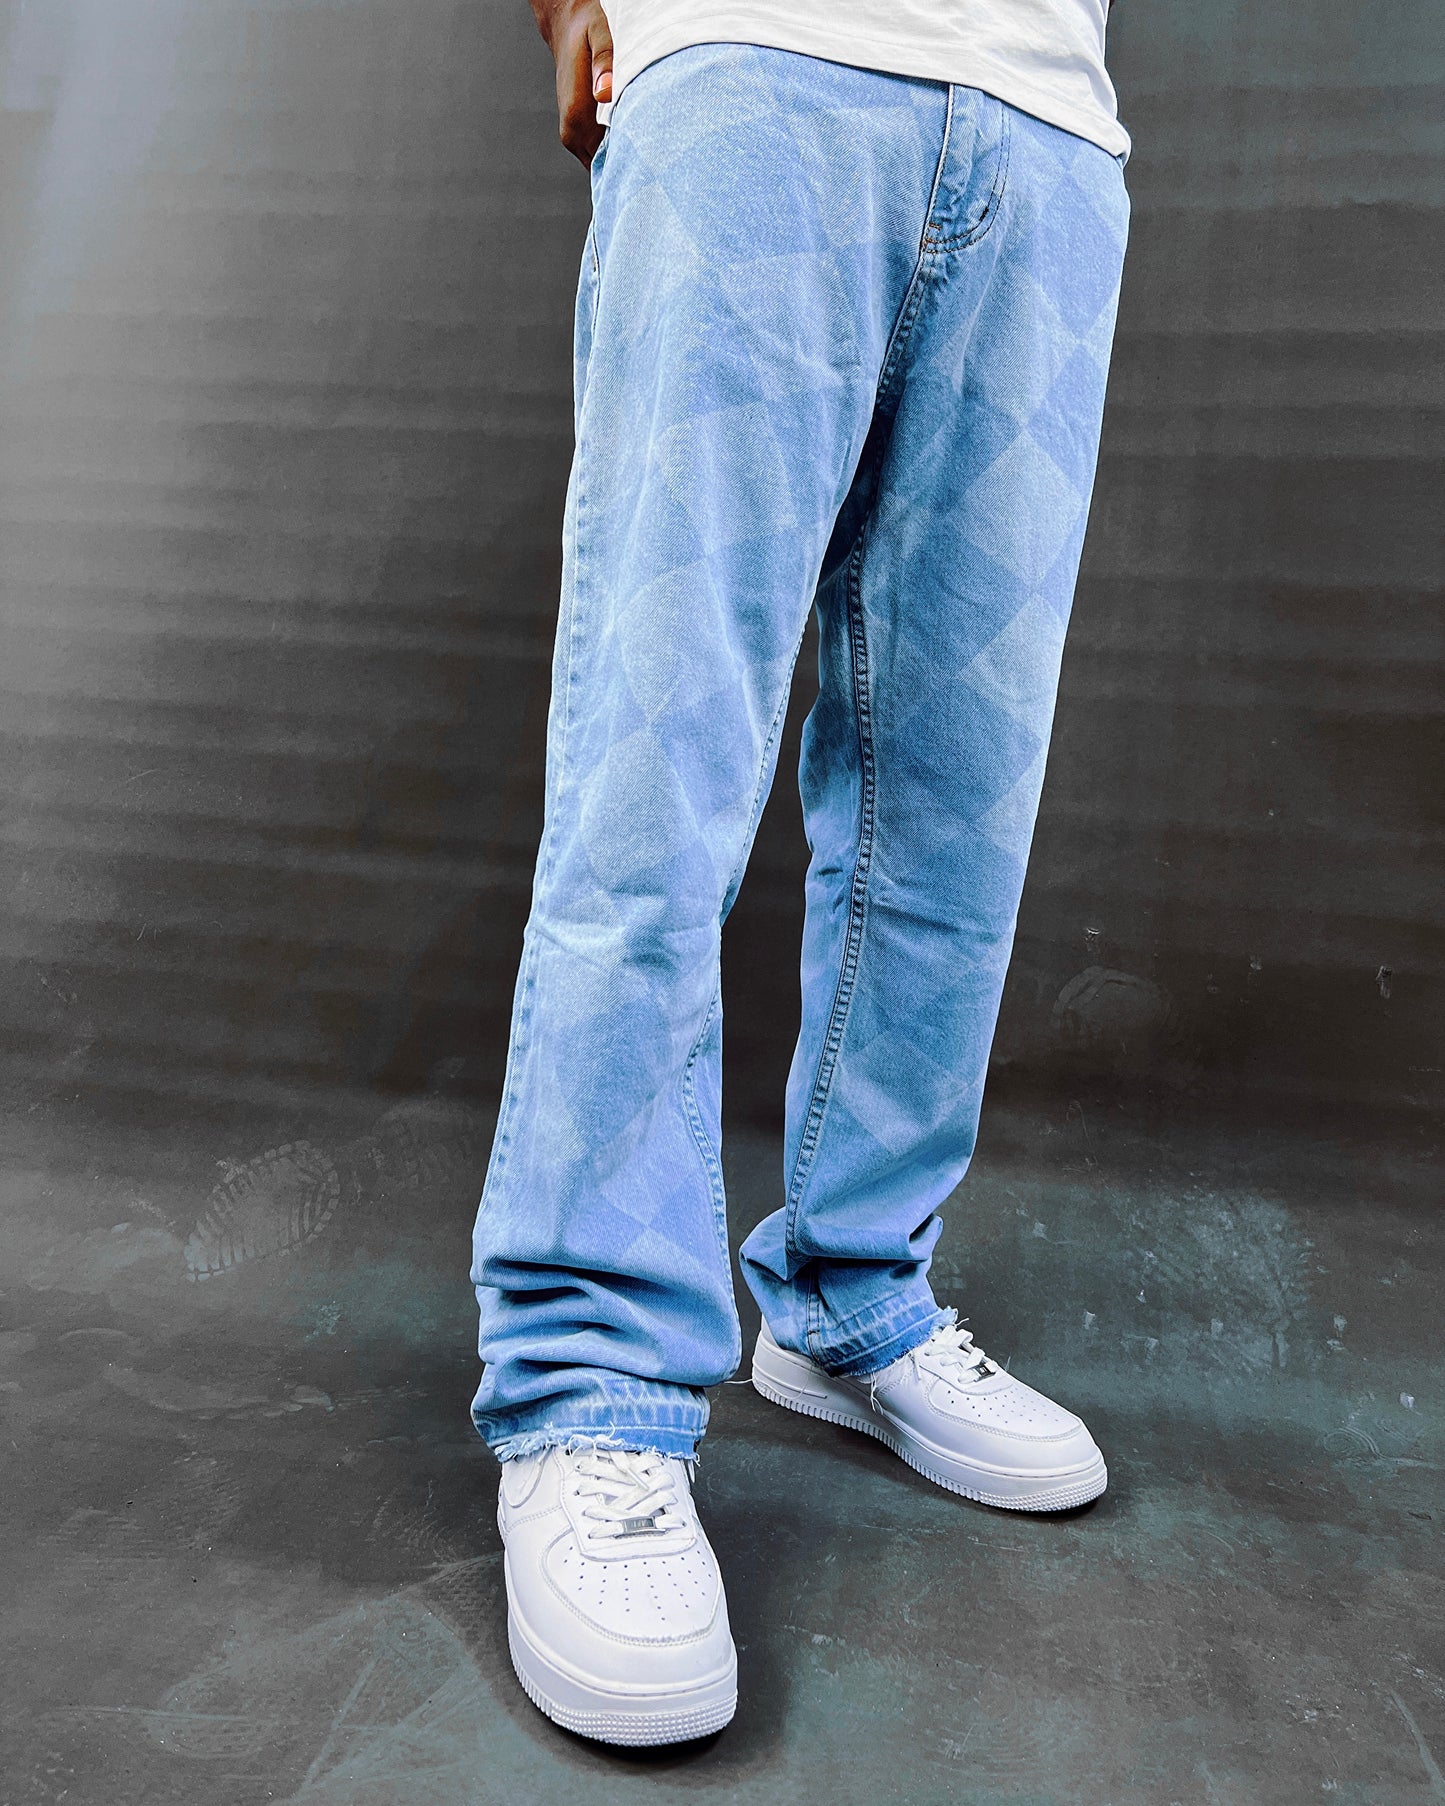 Denim bro checkered jeans in blue